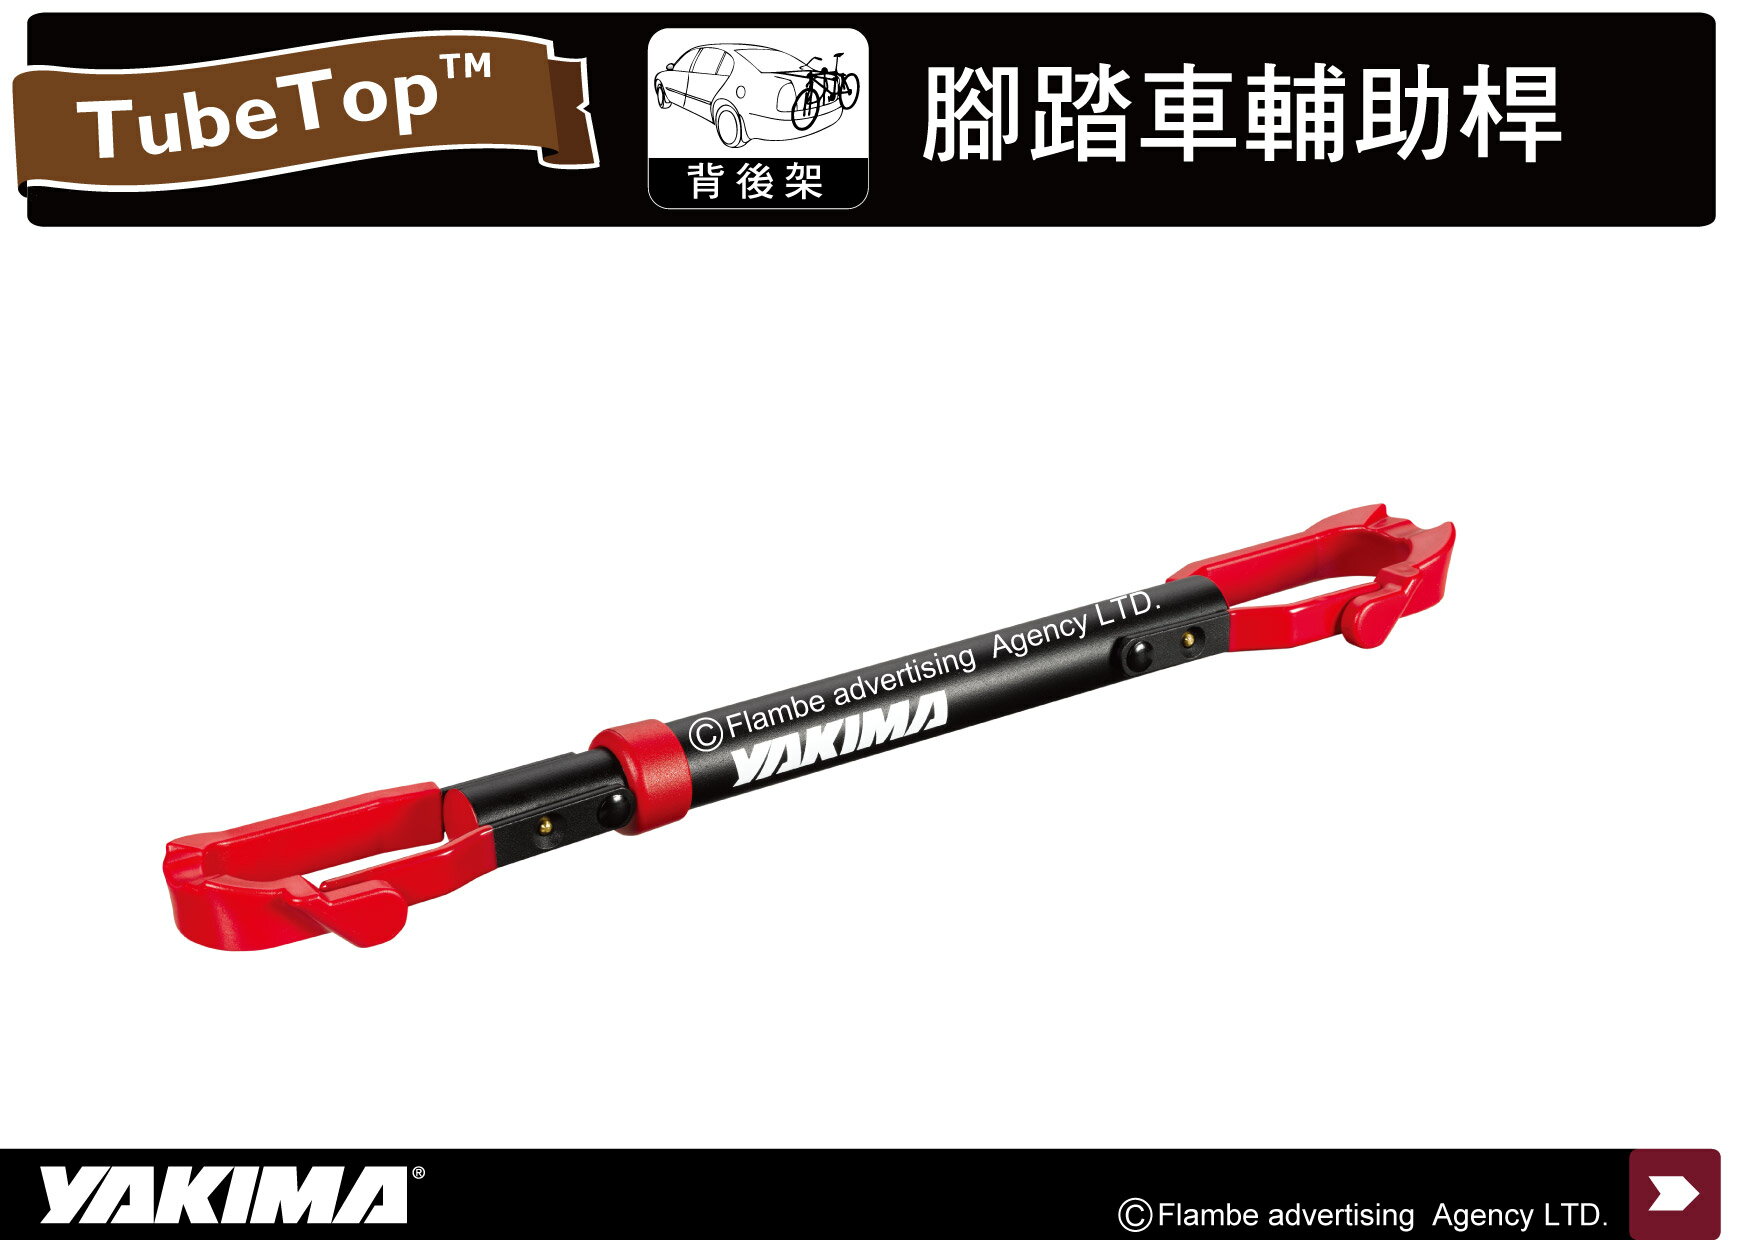 【MRK】YAKIMA 2531 TubeTop 腳踏車輔助桿 固定支架 攜車架 腳踏車架